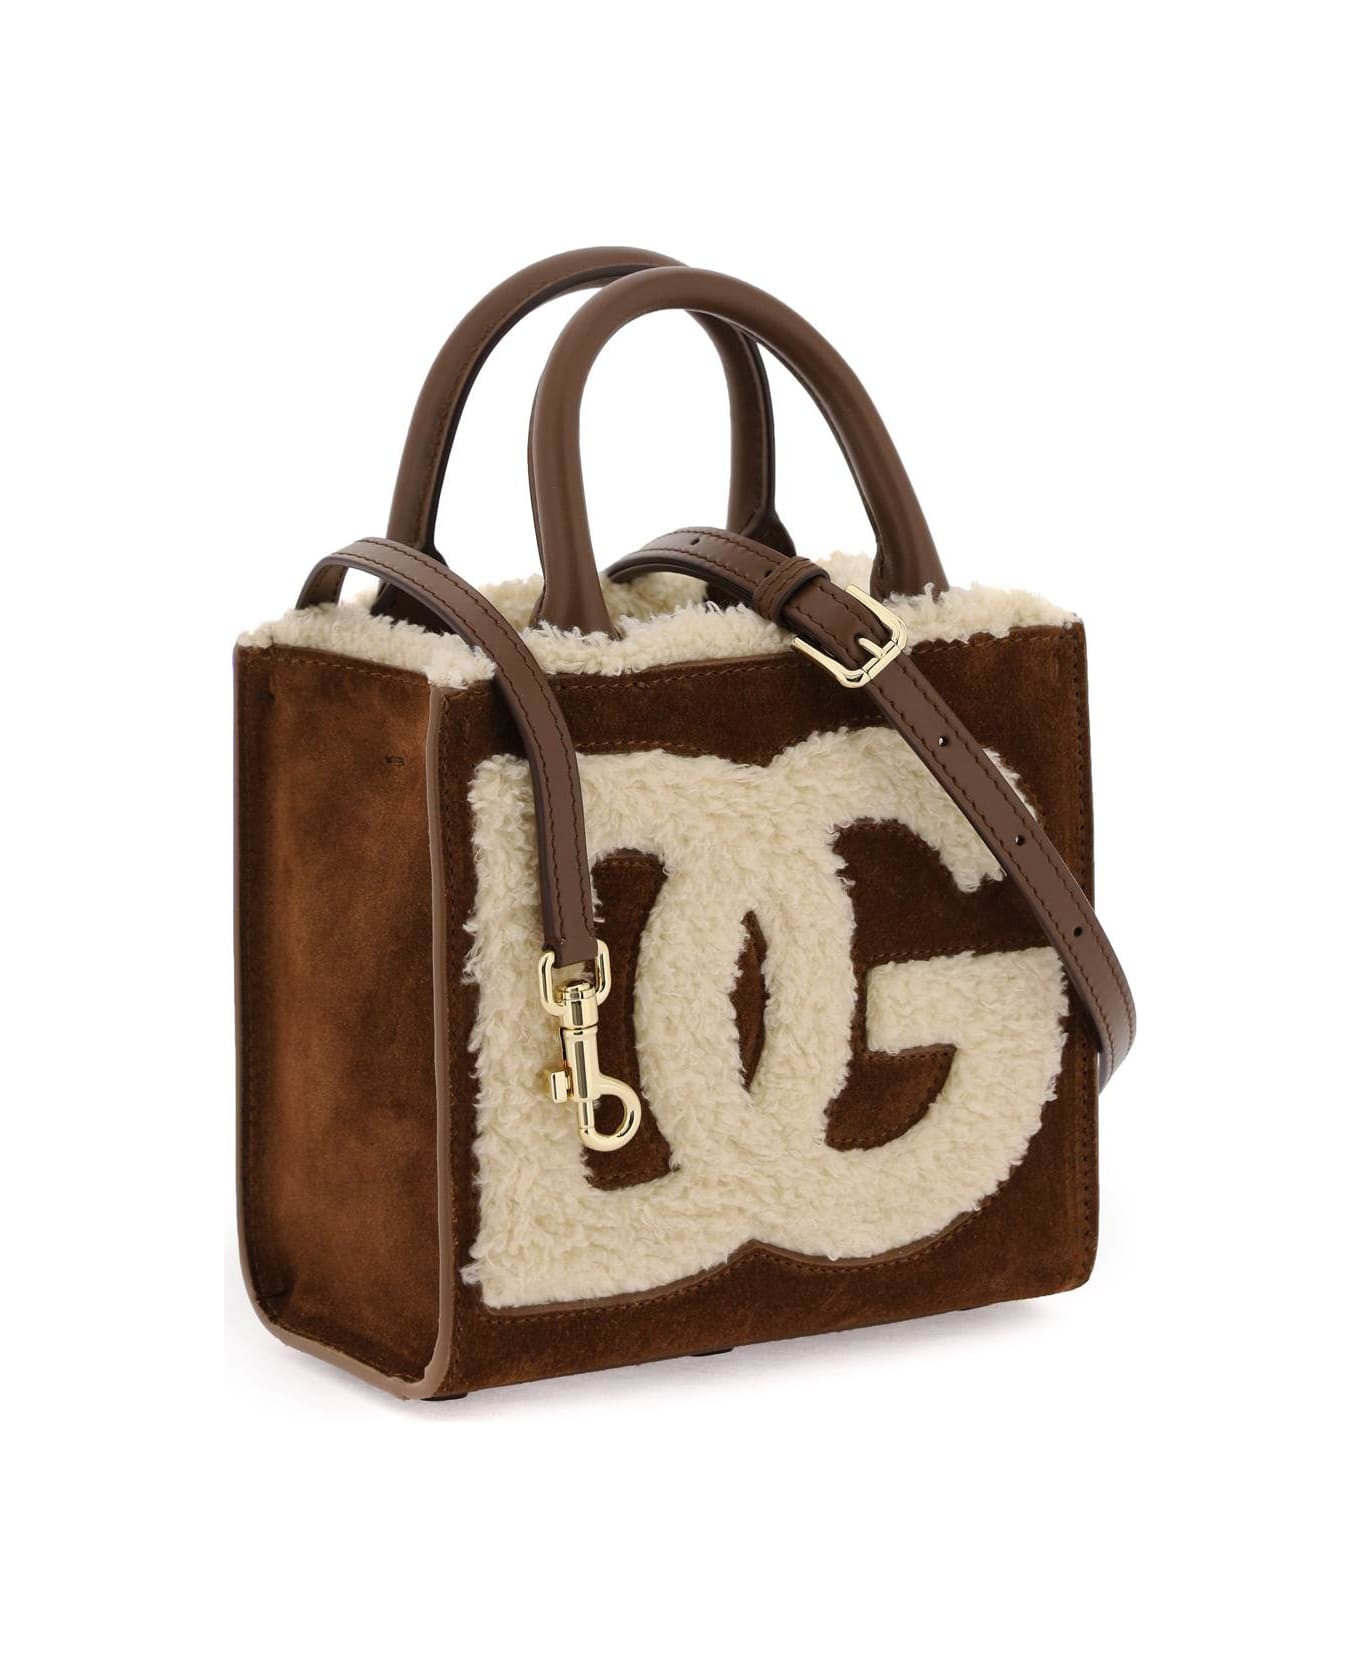 Dolce & Gabbana Dg Daily Mini Suede And Shearling Tote Bag - MARRONE CAFFELATTE (Beige)